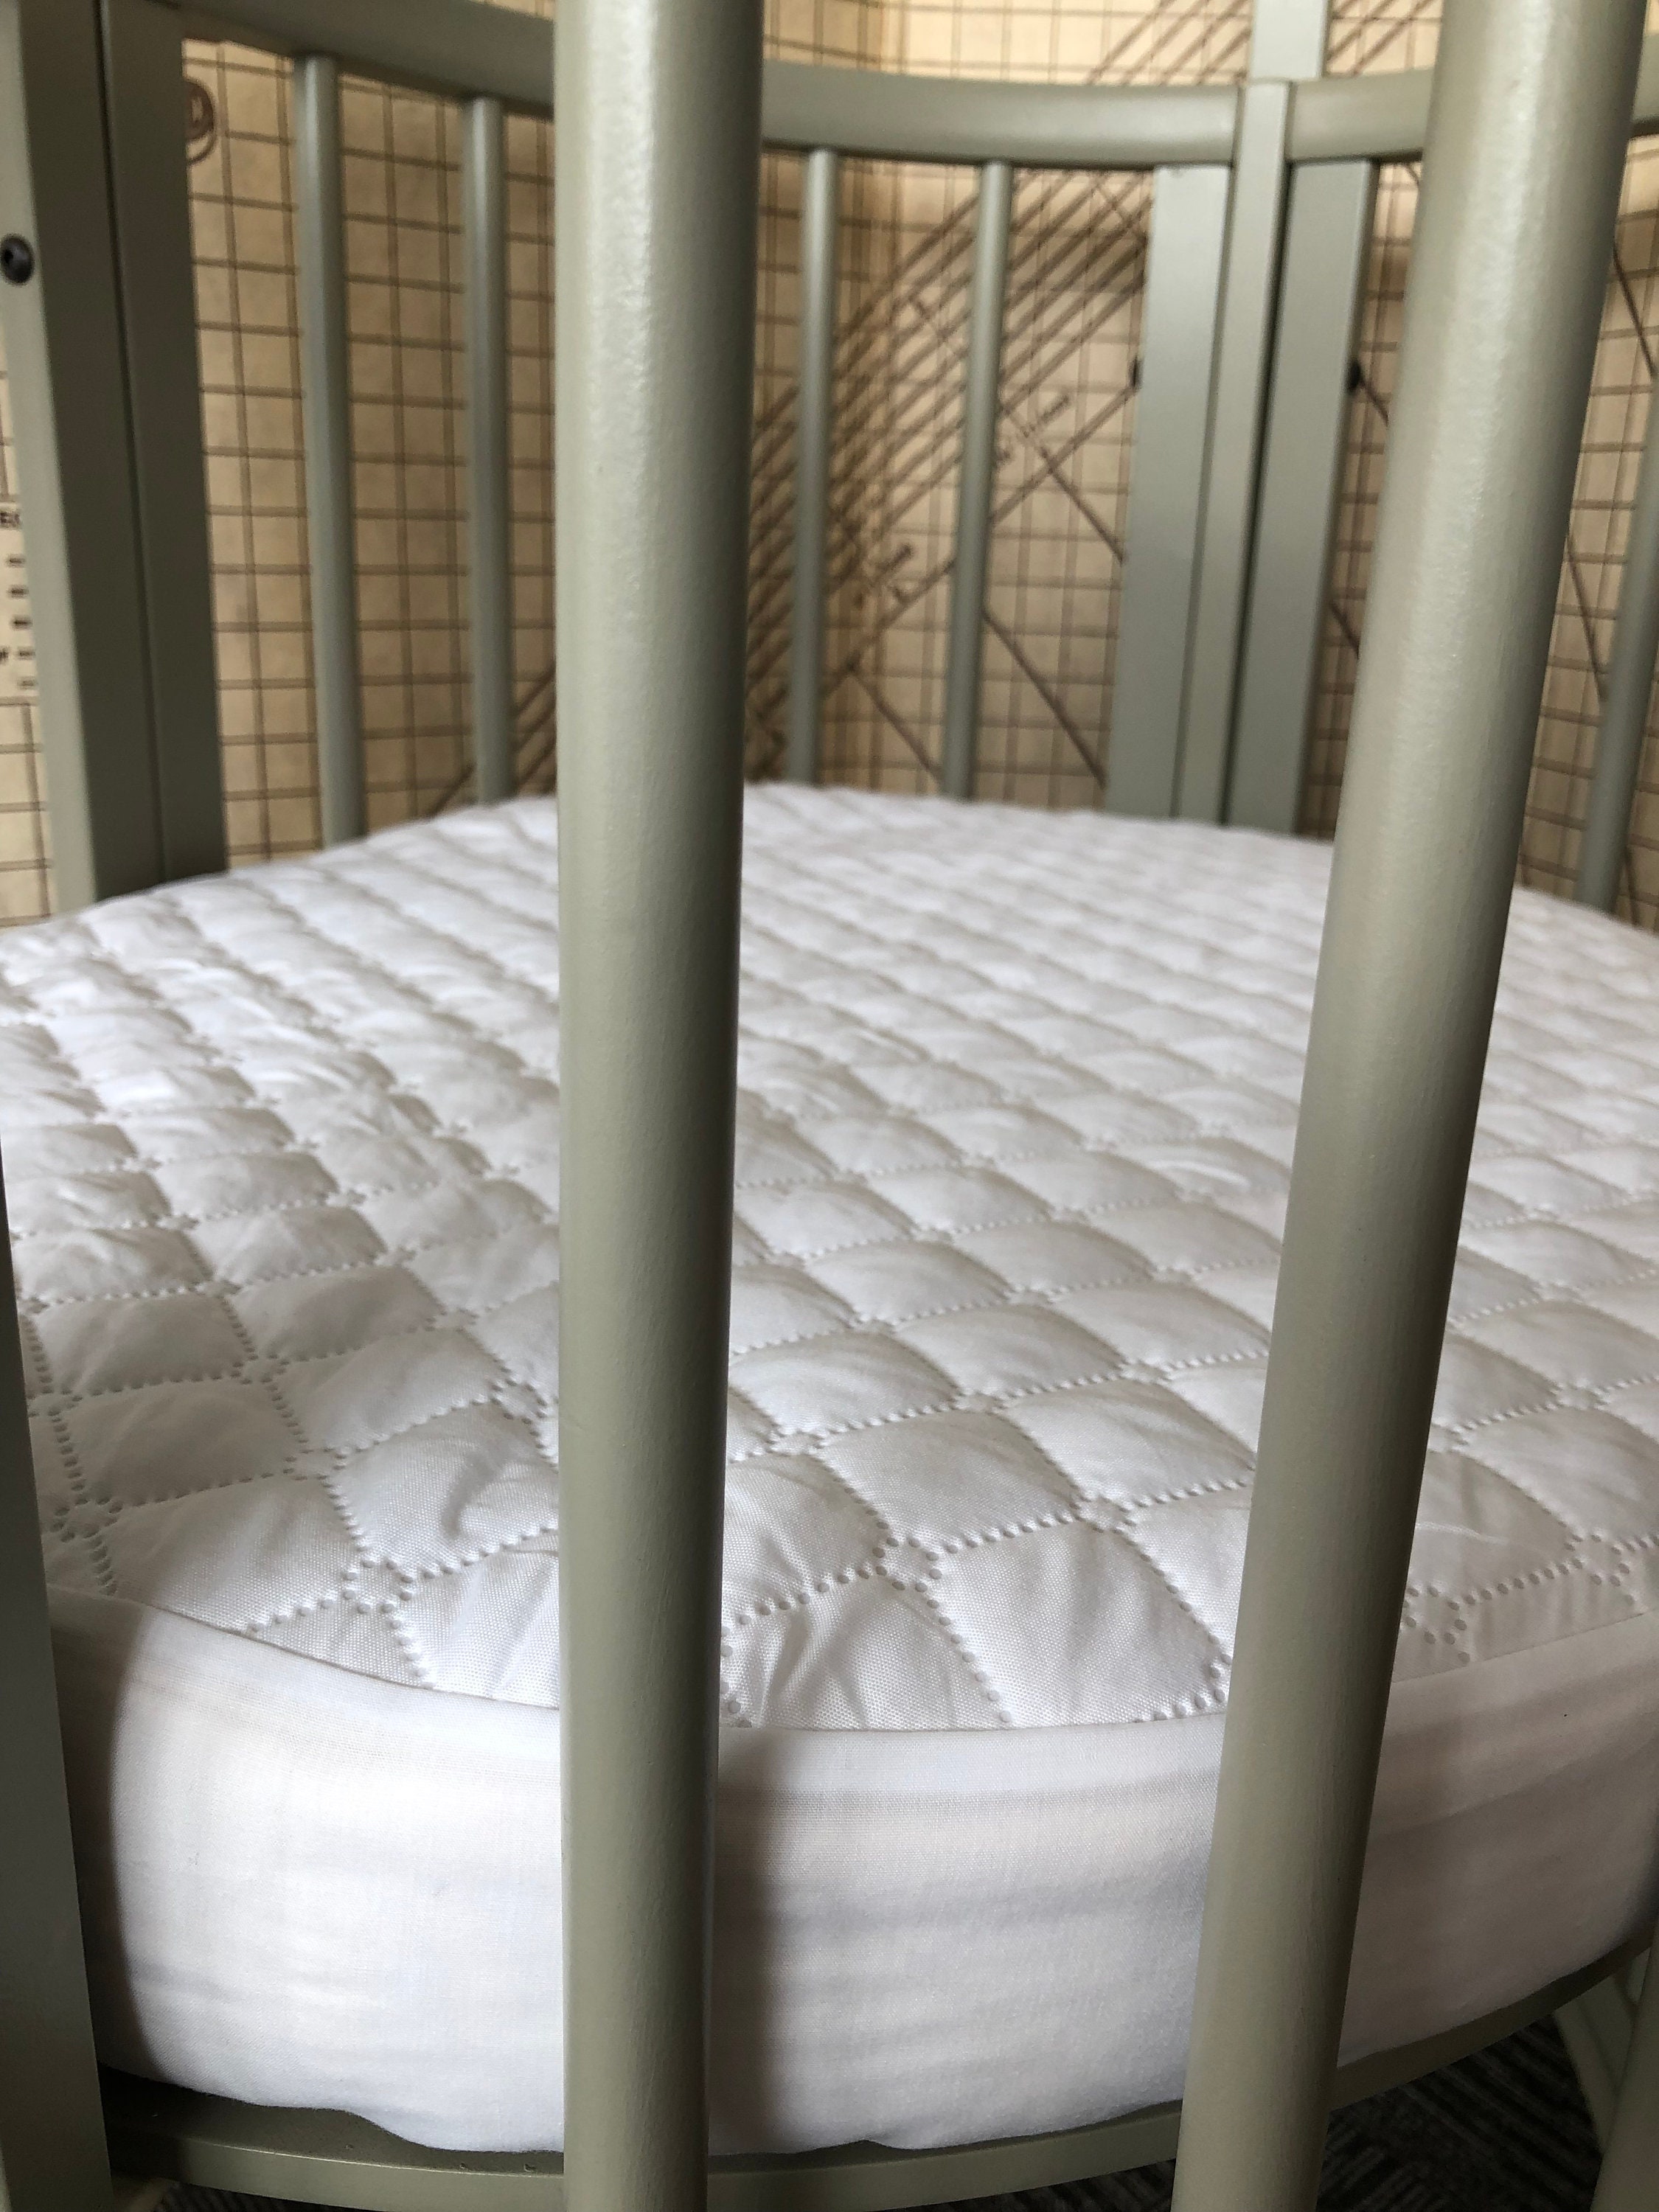 Waterproof Baby Bed Pad - 40x31 Inch - Gray Bear